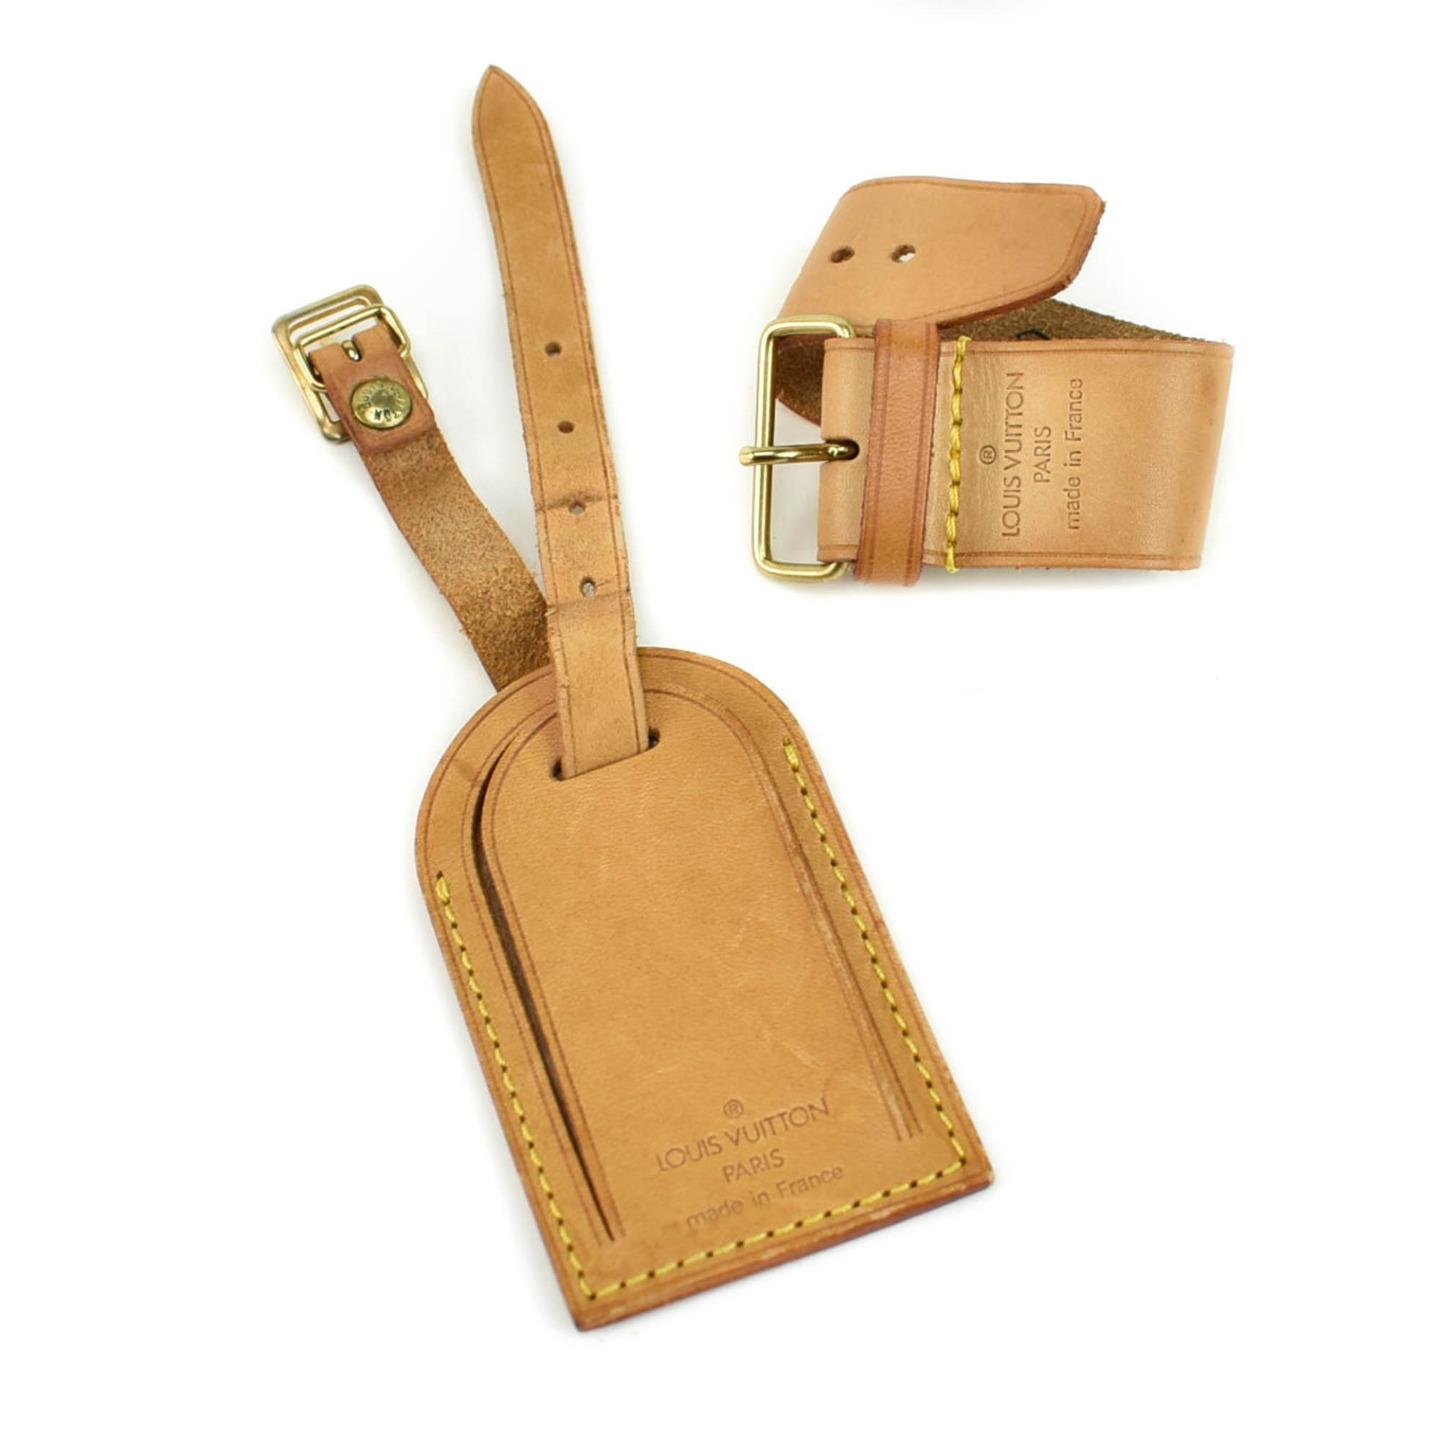 LOUIS VUITTON: Tan, Vachetta Leather Logo Luggage Tag & Keepall Set (ps) | eBay